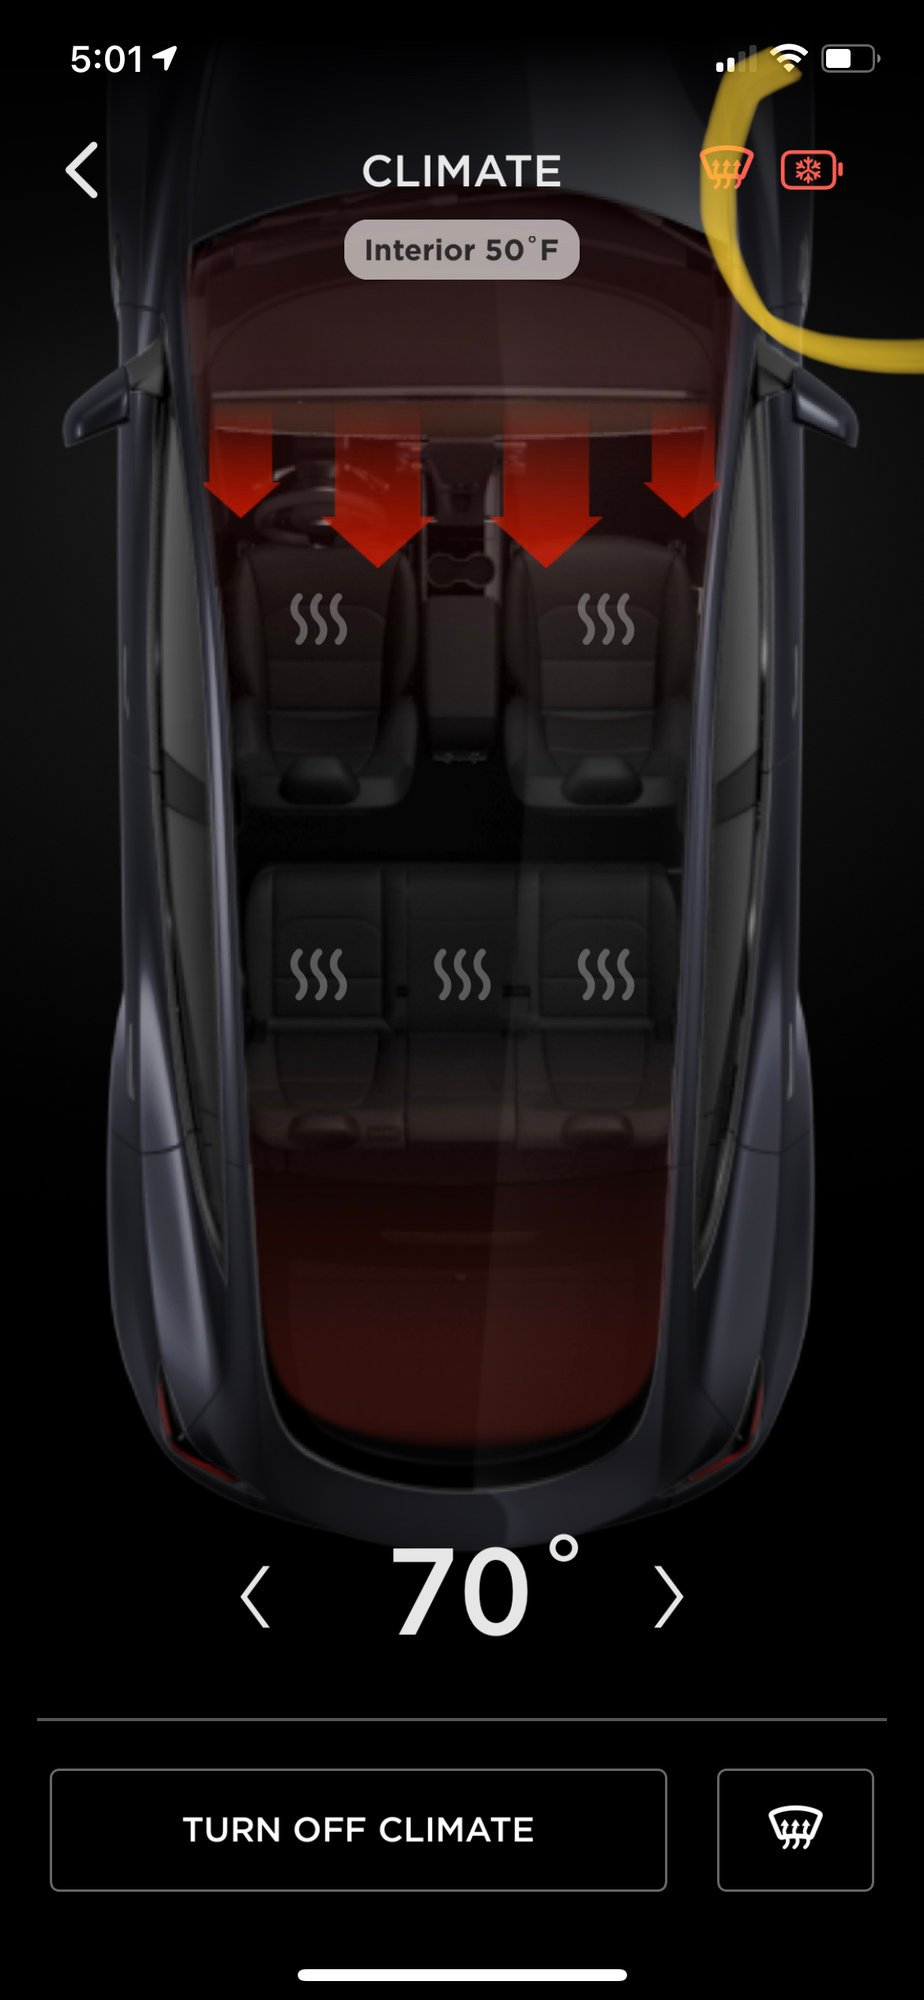 Warming battery icon in app | Tesla Motors Club